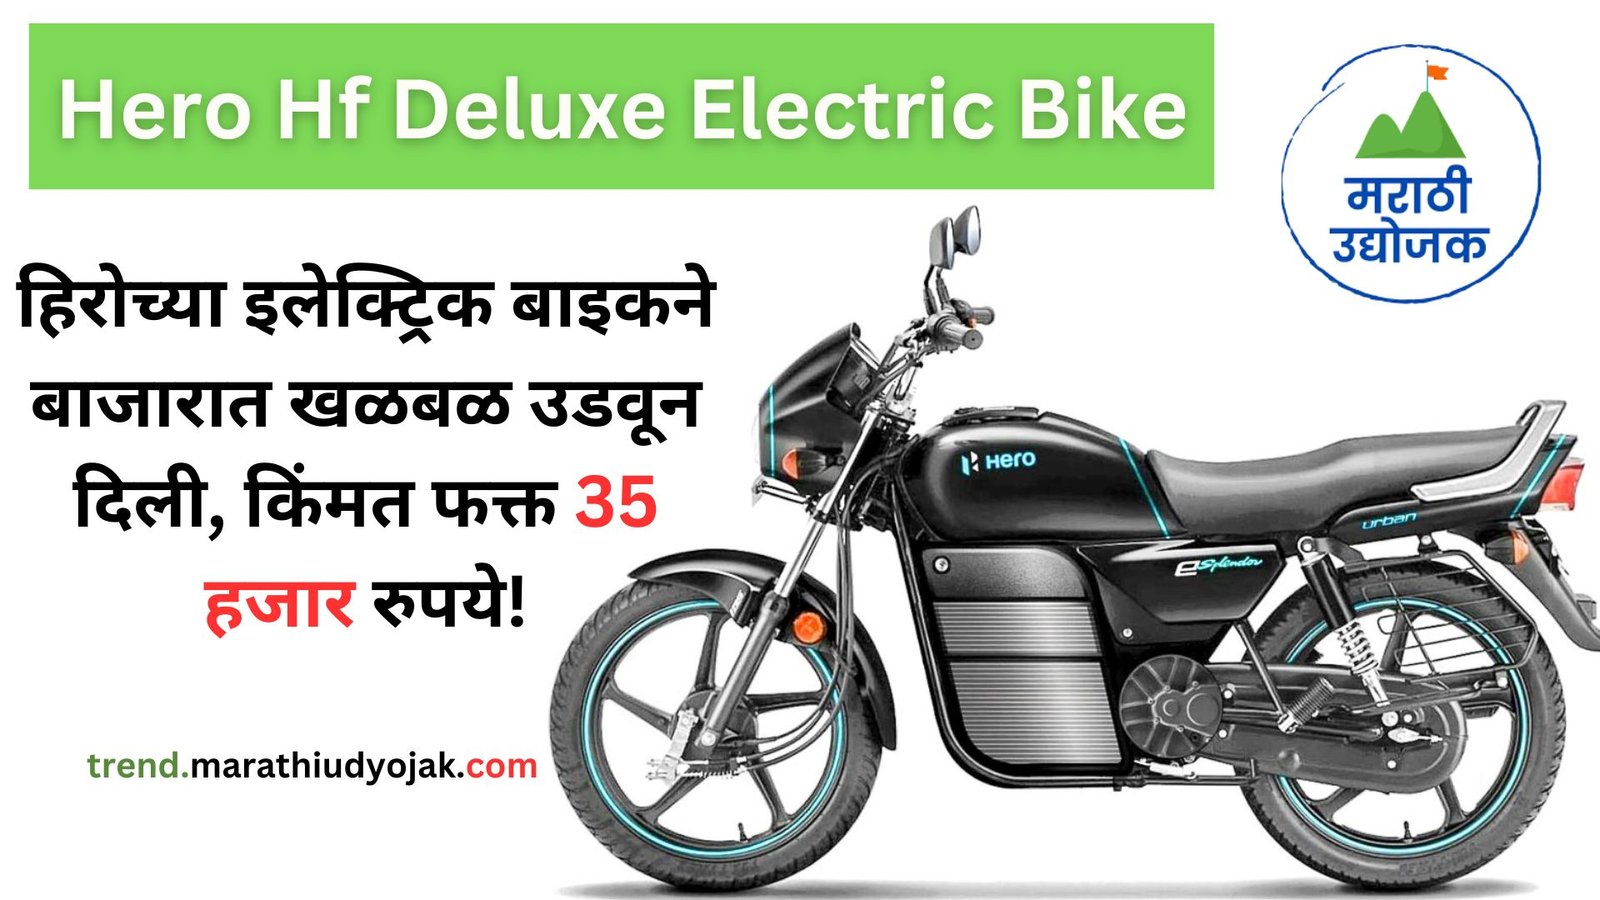 Hero Hf Deluxe Electric Bike (3)